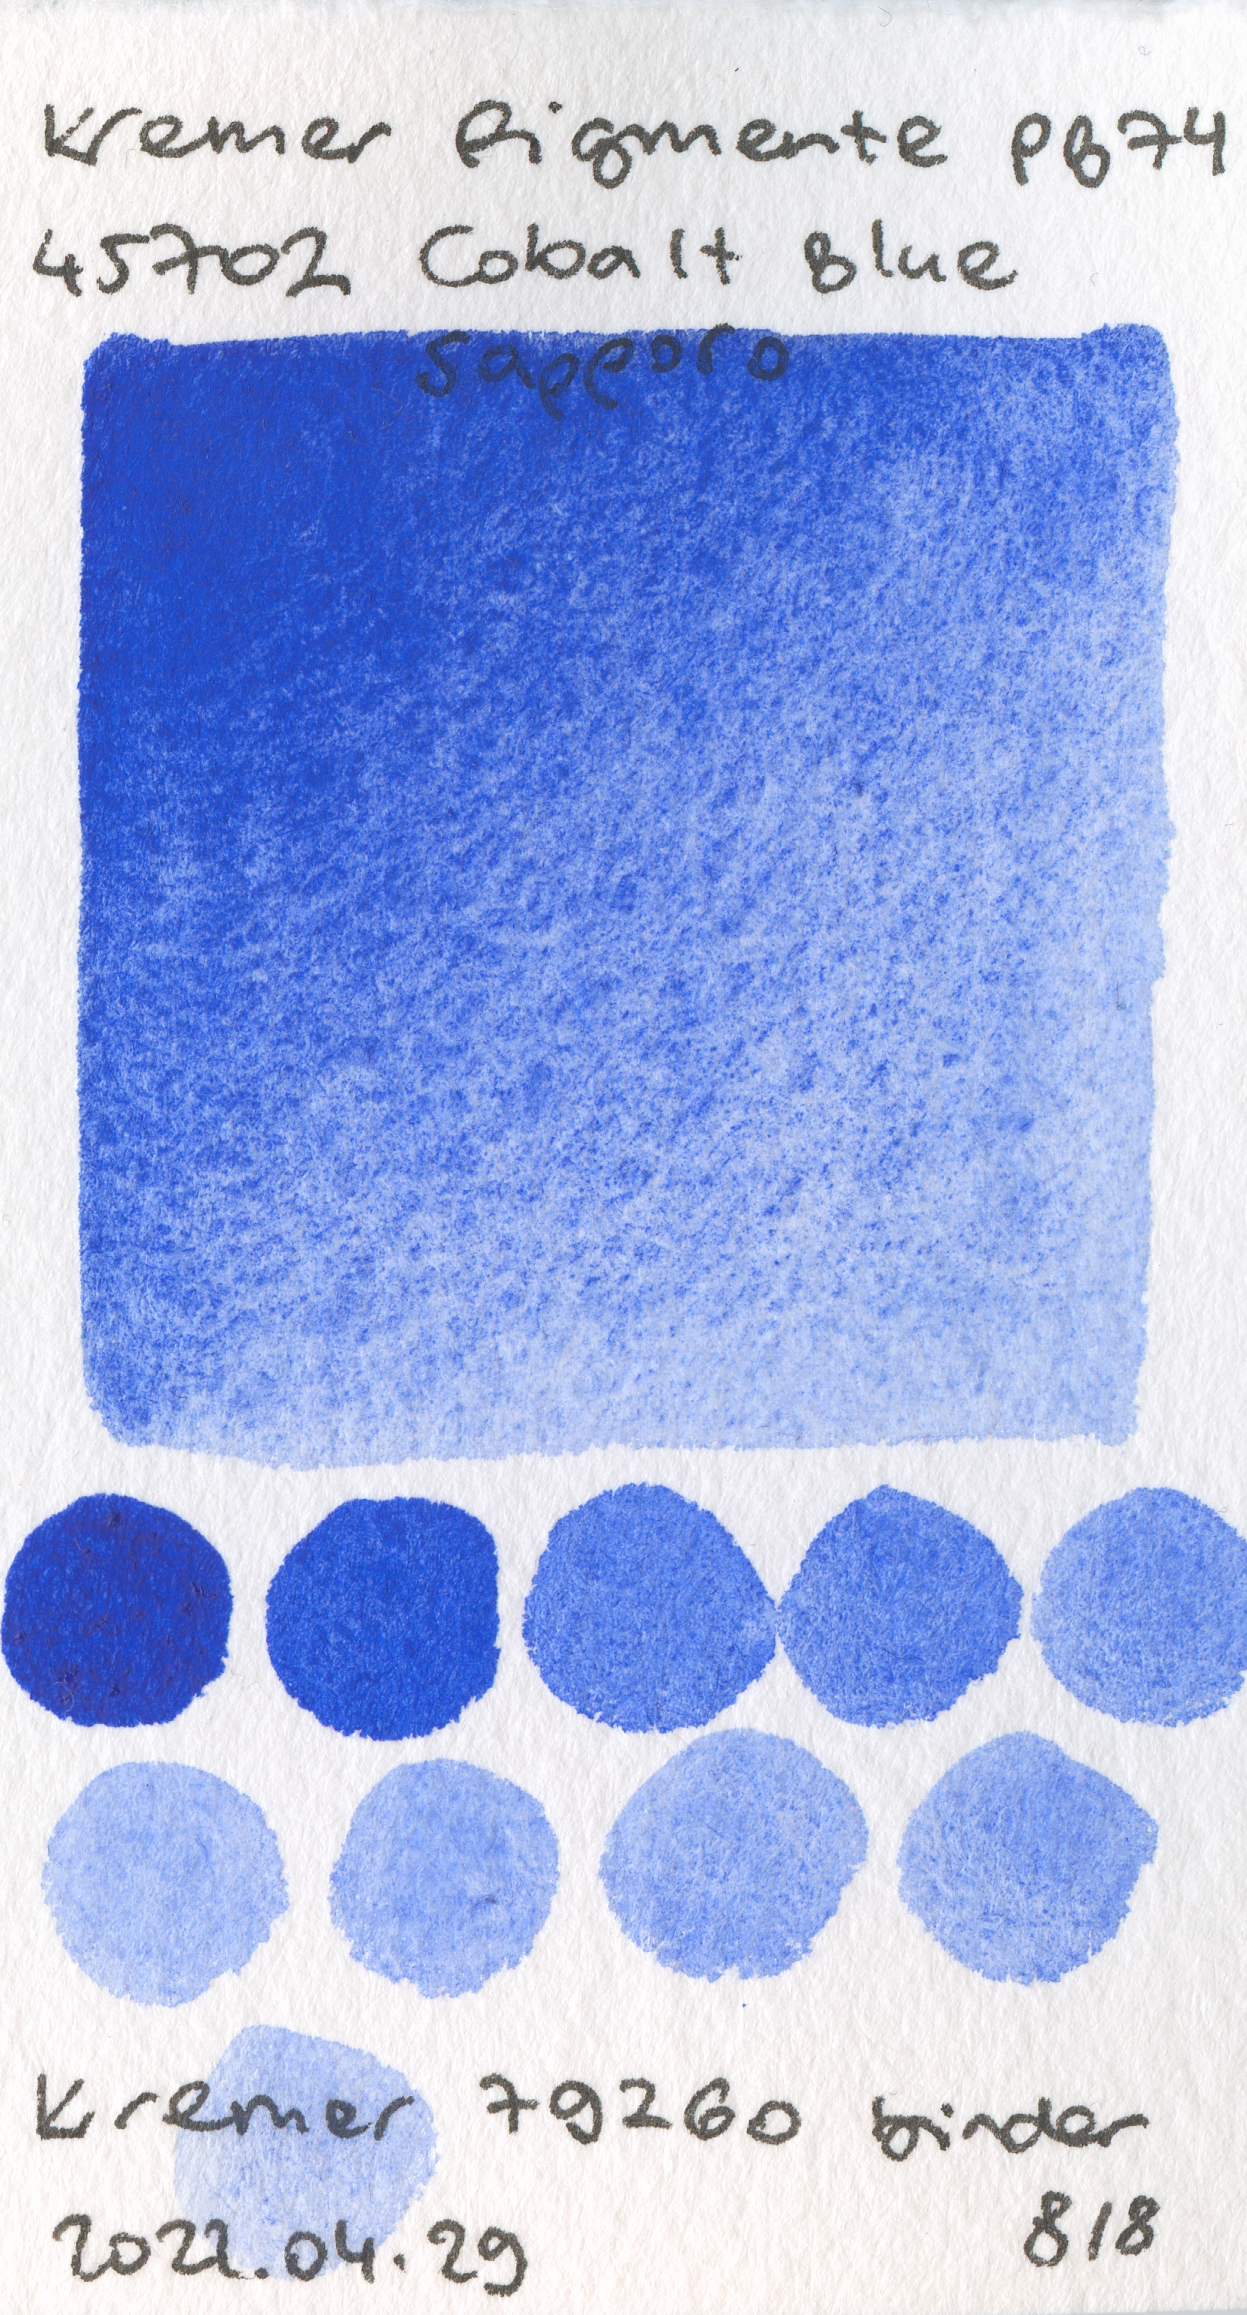 Kremer Pigmente [Dry] Pigments 45702 Cobalt Blue, Sapporo PB74 watercolor swatch